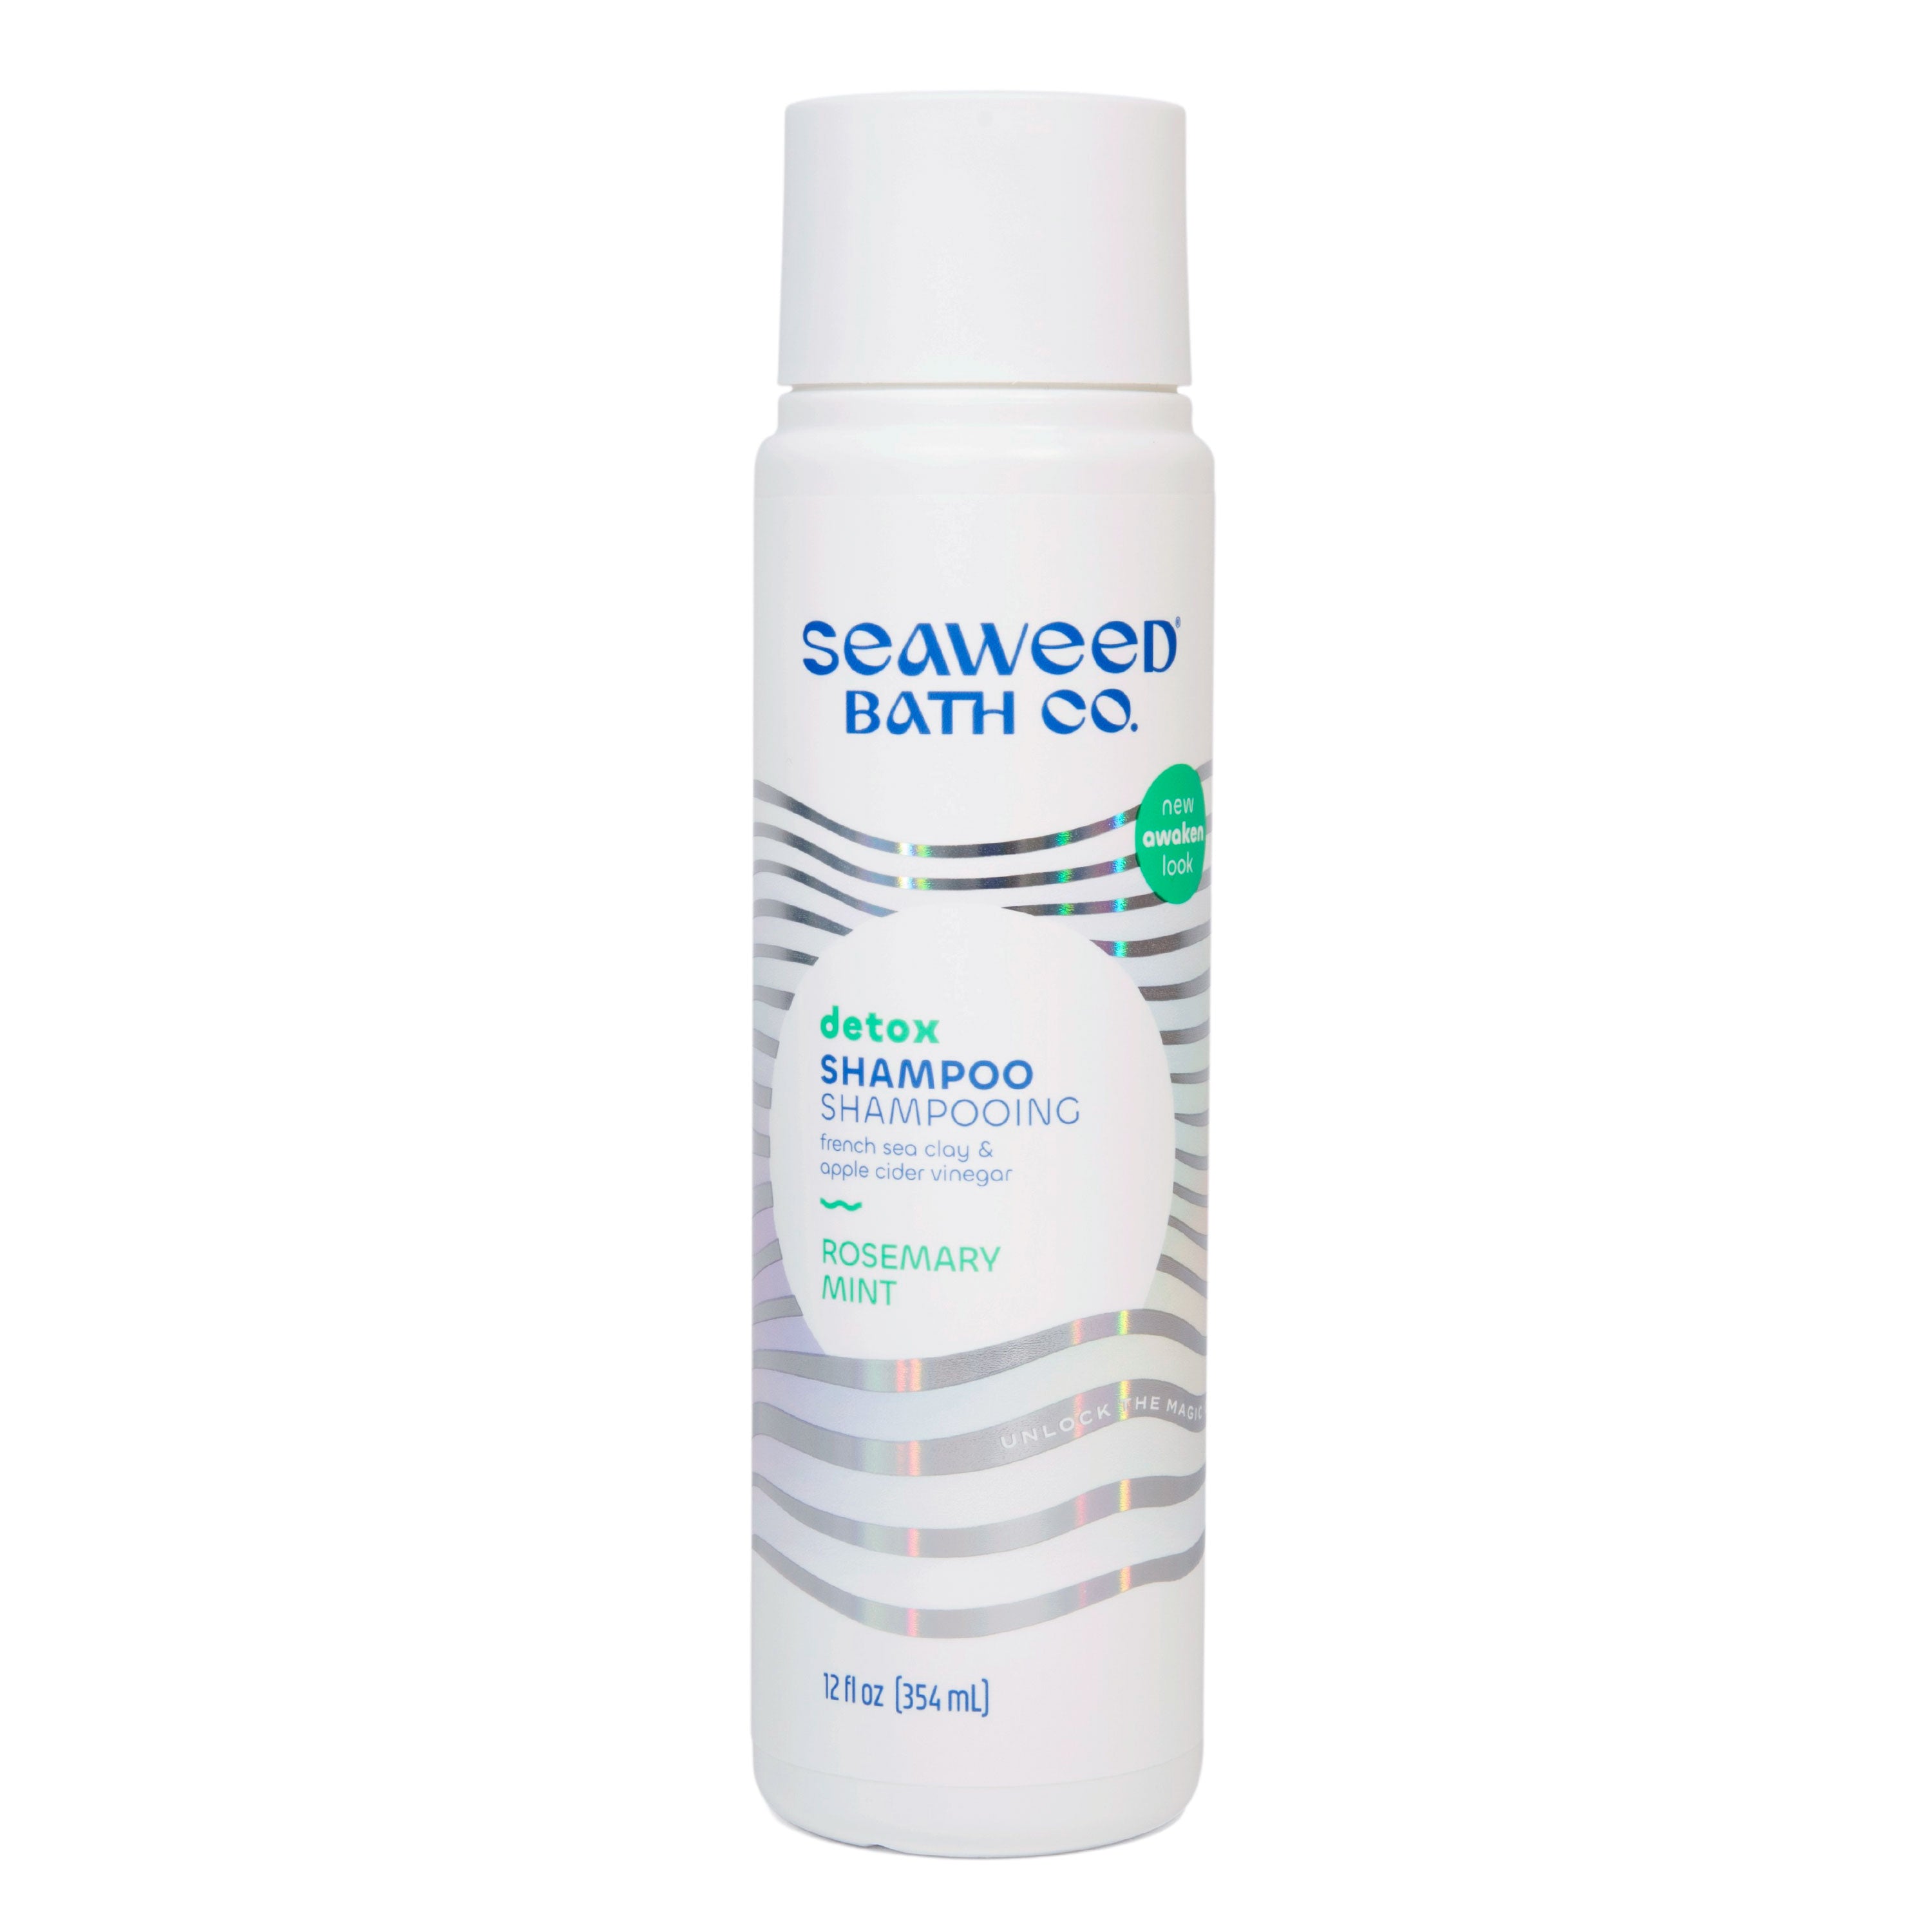 Shampoo purificante detox DIVINA - BioEmme